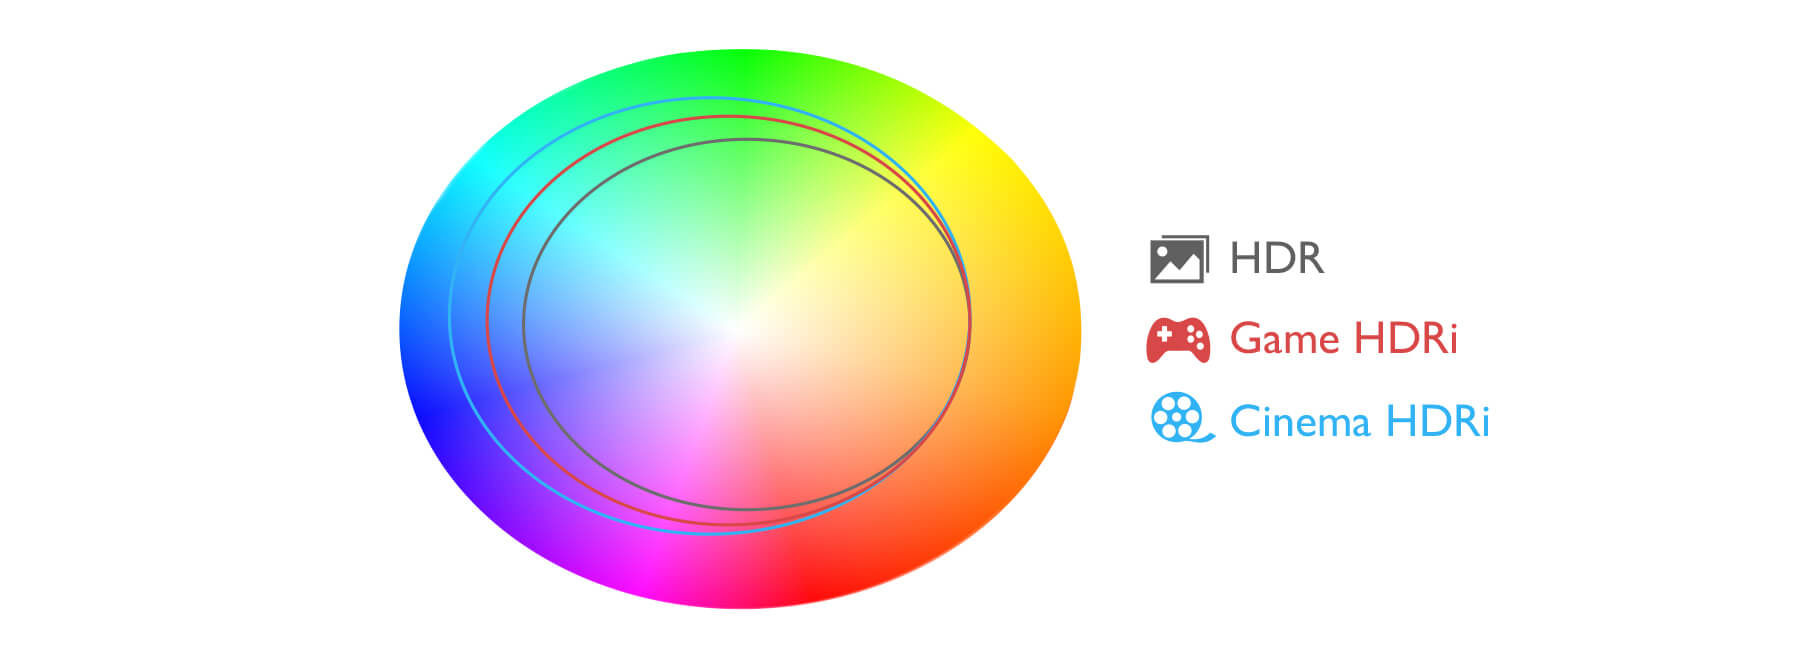 BenQ monitor HDRi technology makes colors richer and more vivid